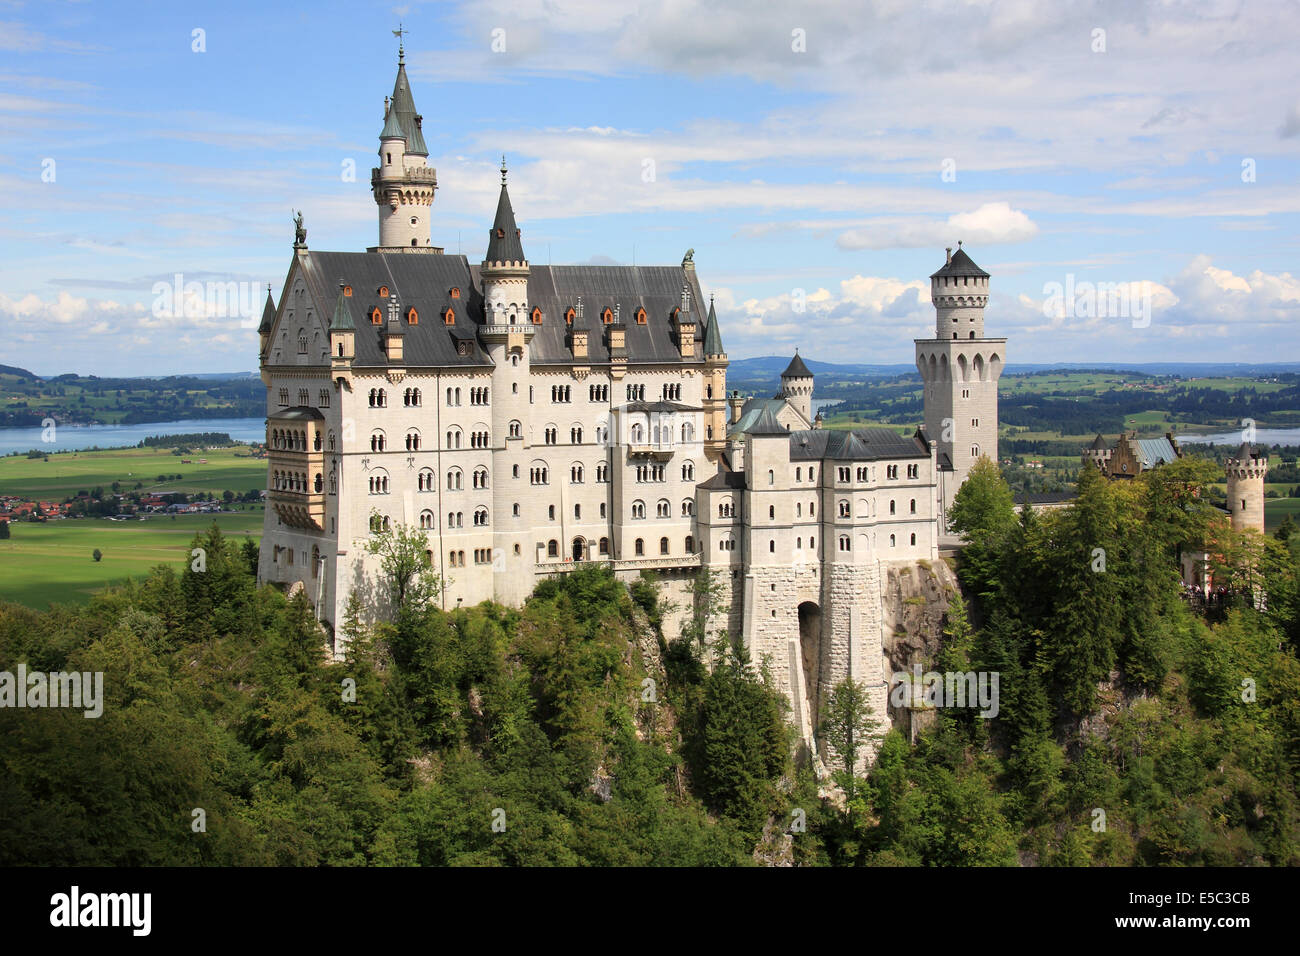 Ludwig II’s dream palace, Schloss Neuschwanstein in Bavaria, Germany Stock Photo